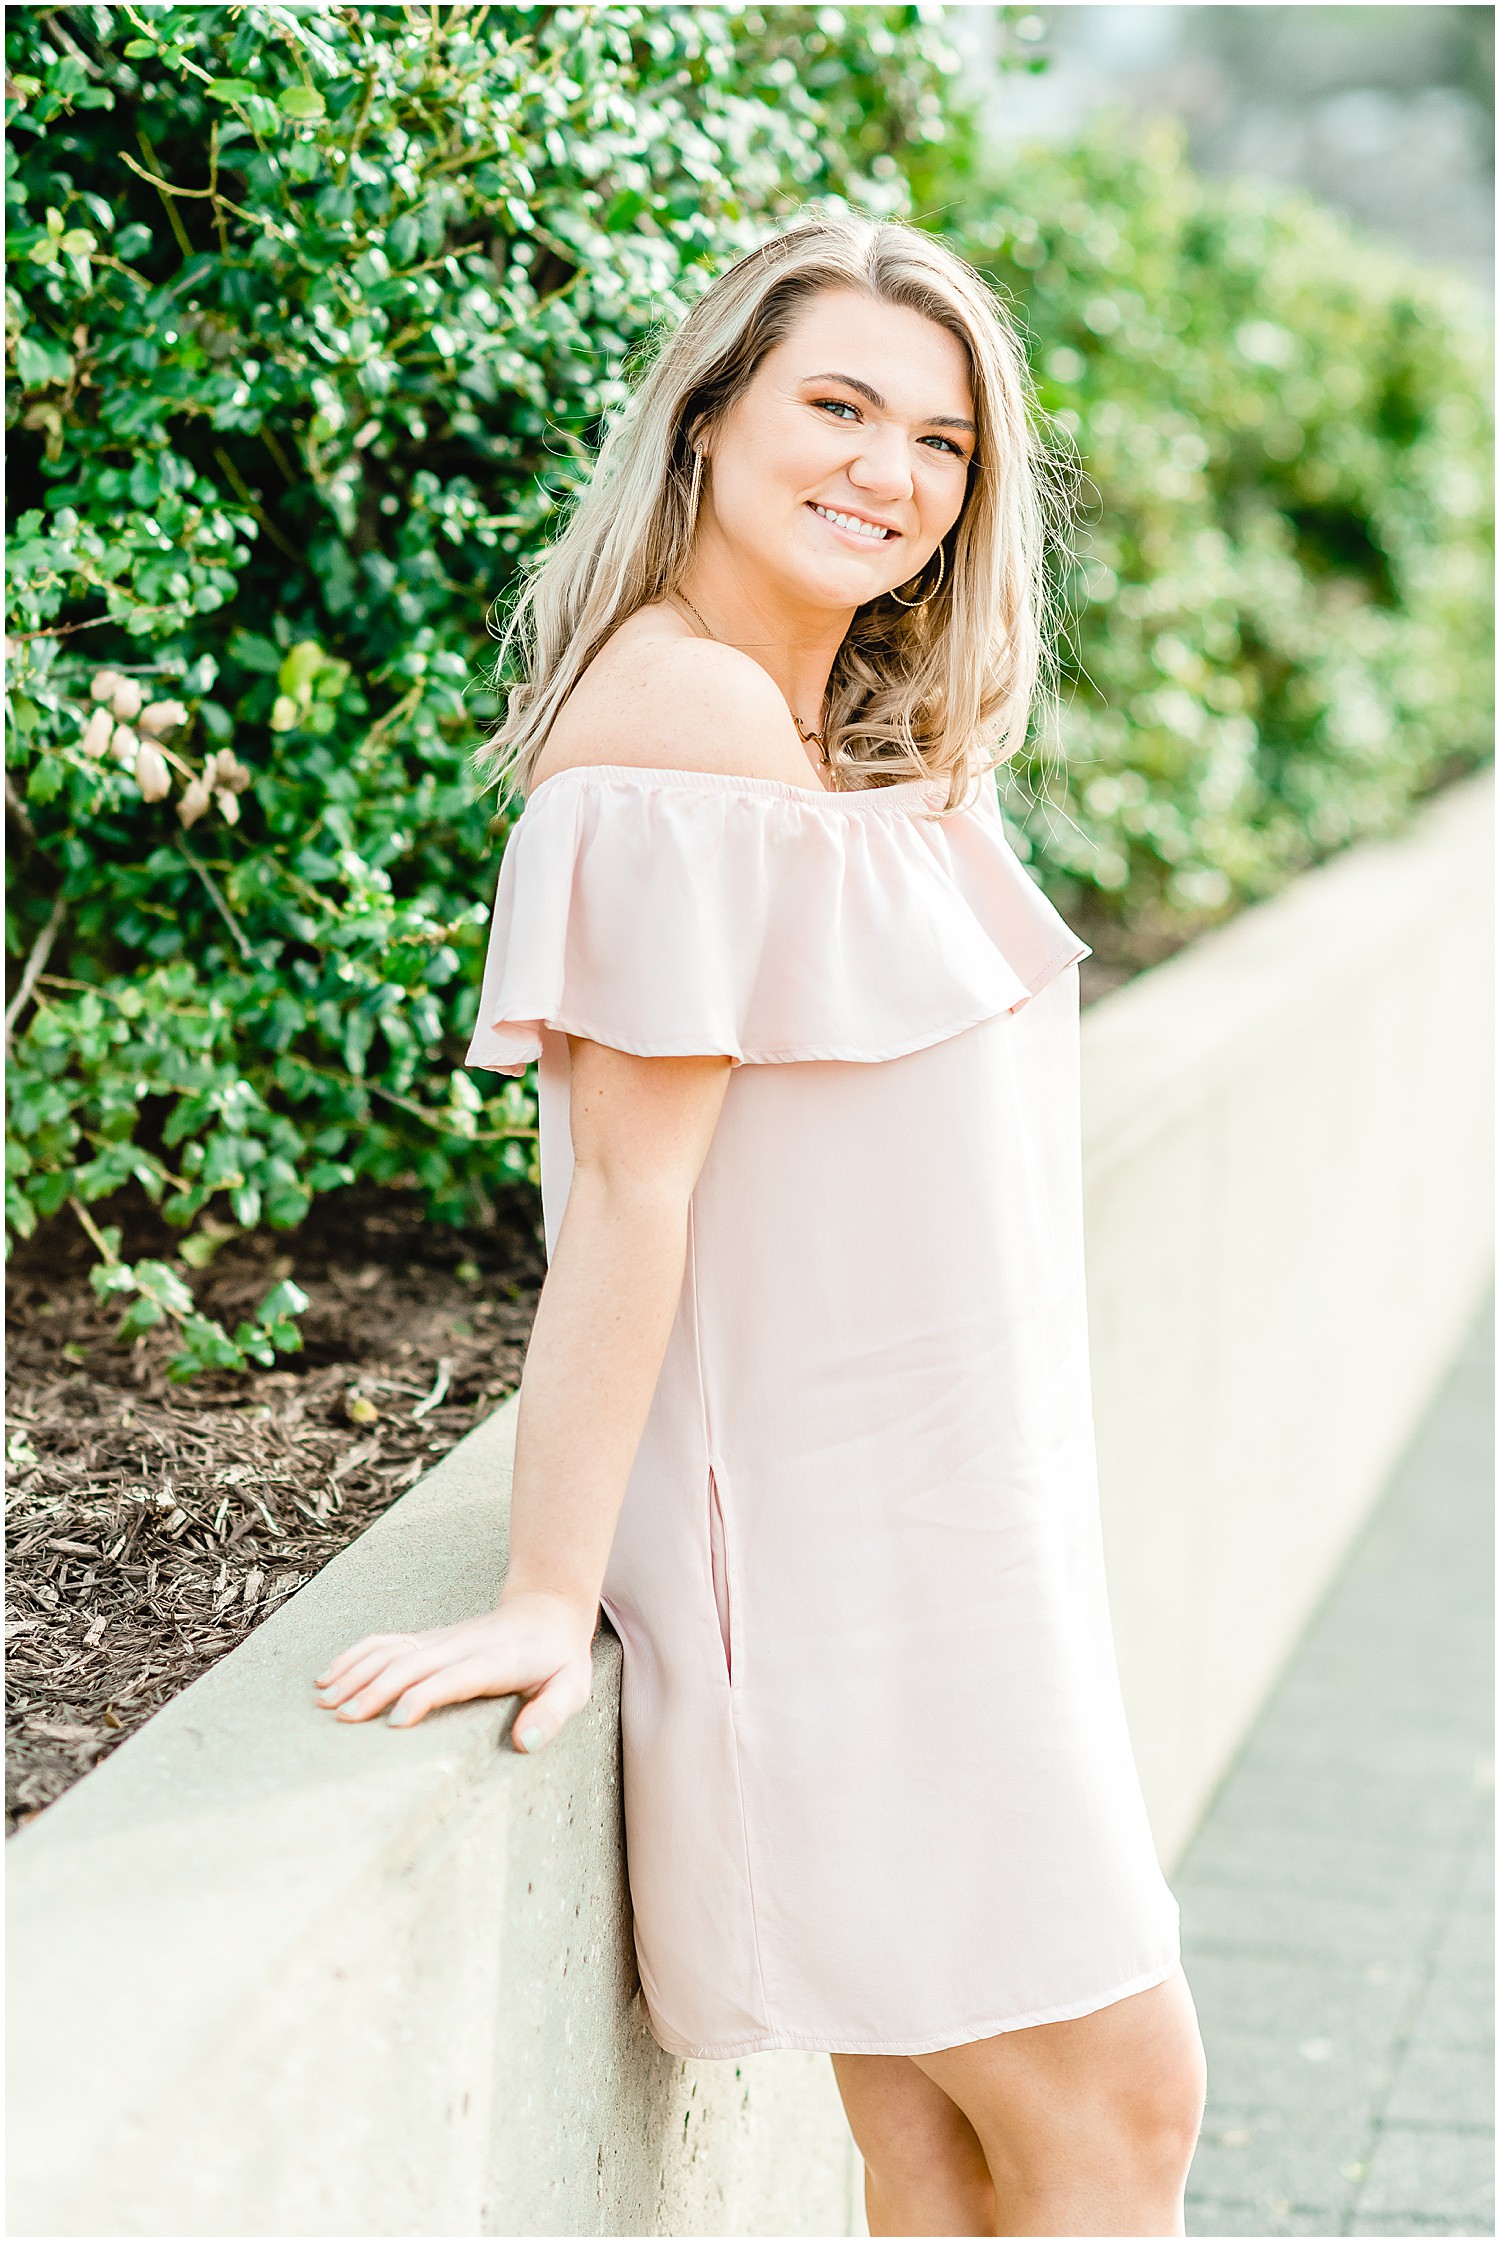 senior girl posing in pink dress for downtown jefferson city high school senior session by green bushes on sidewalk